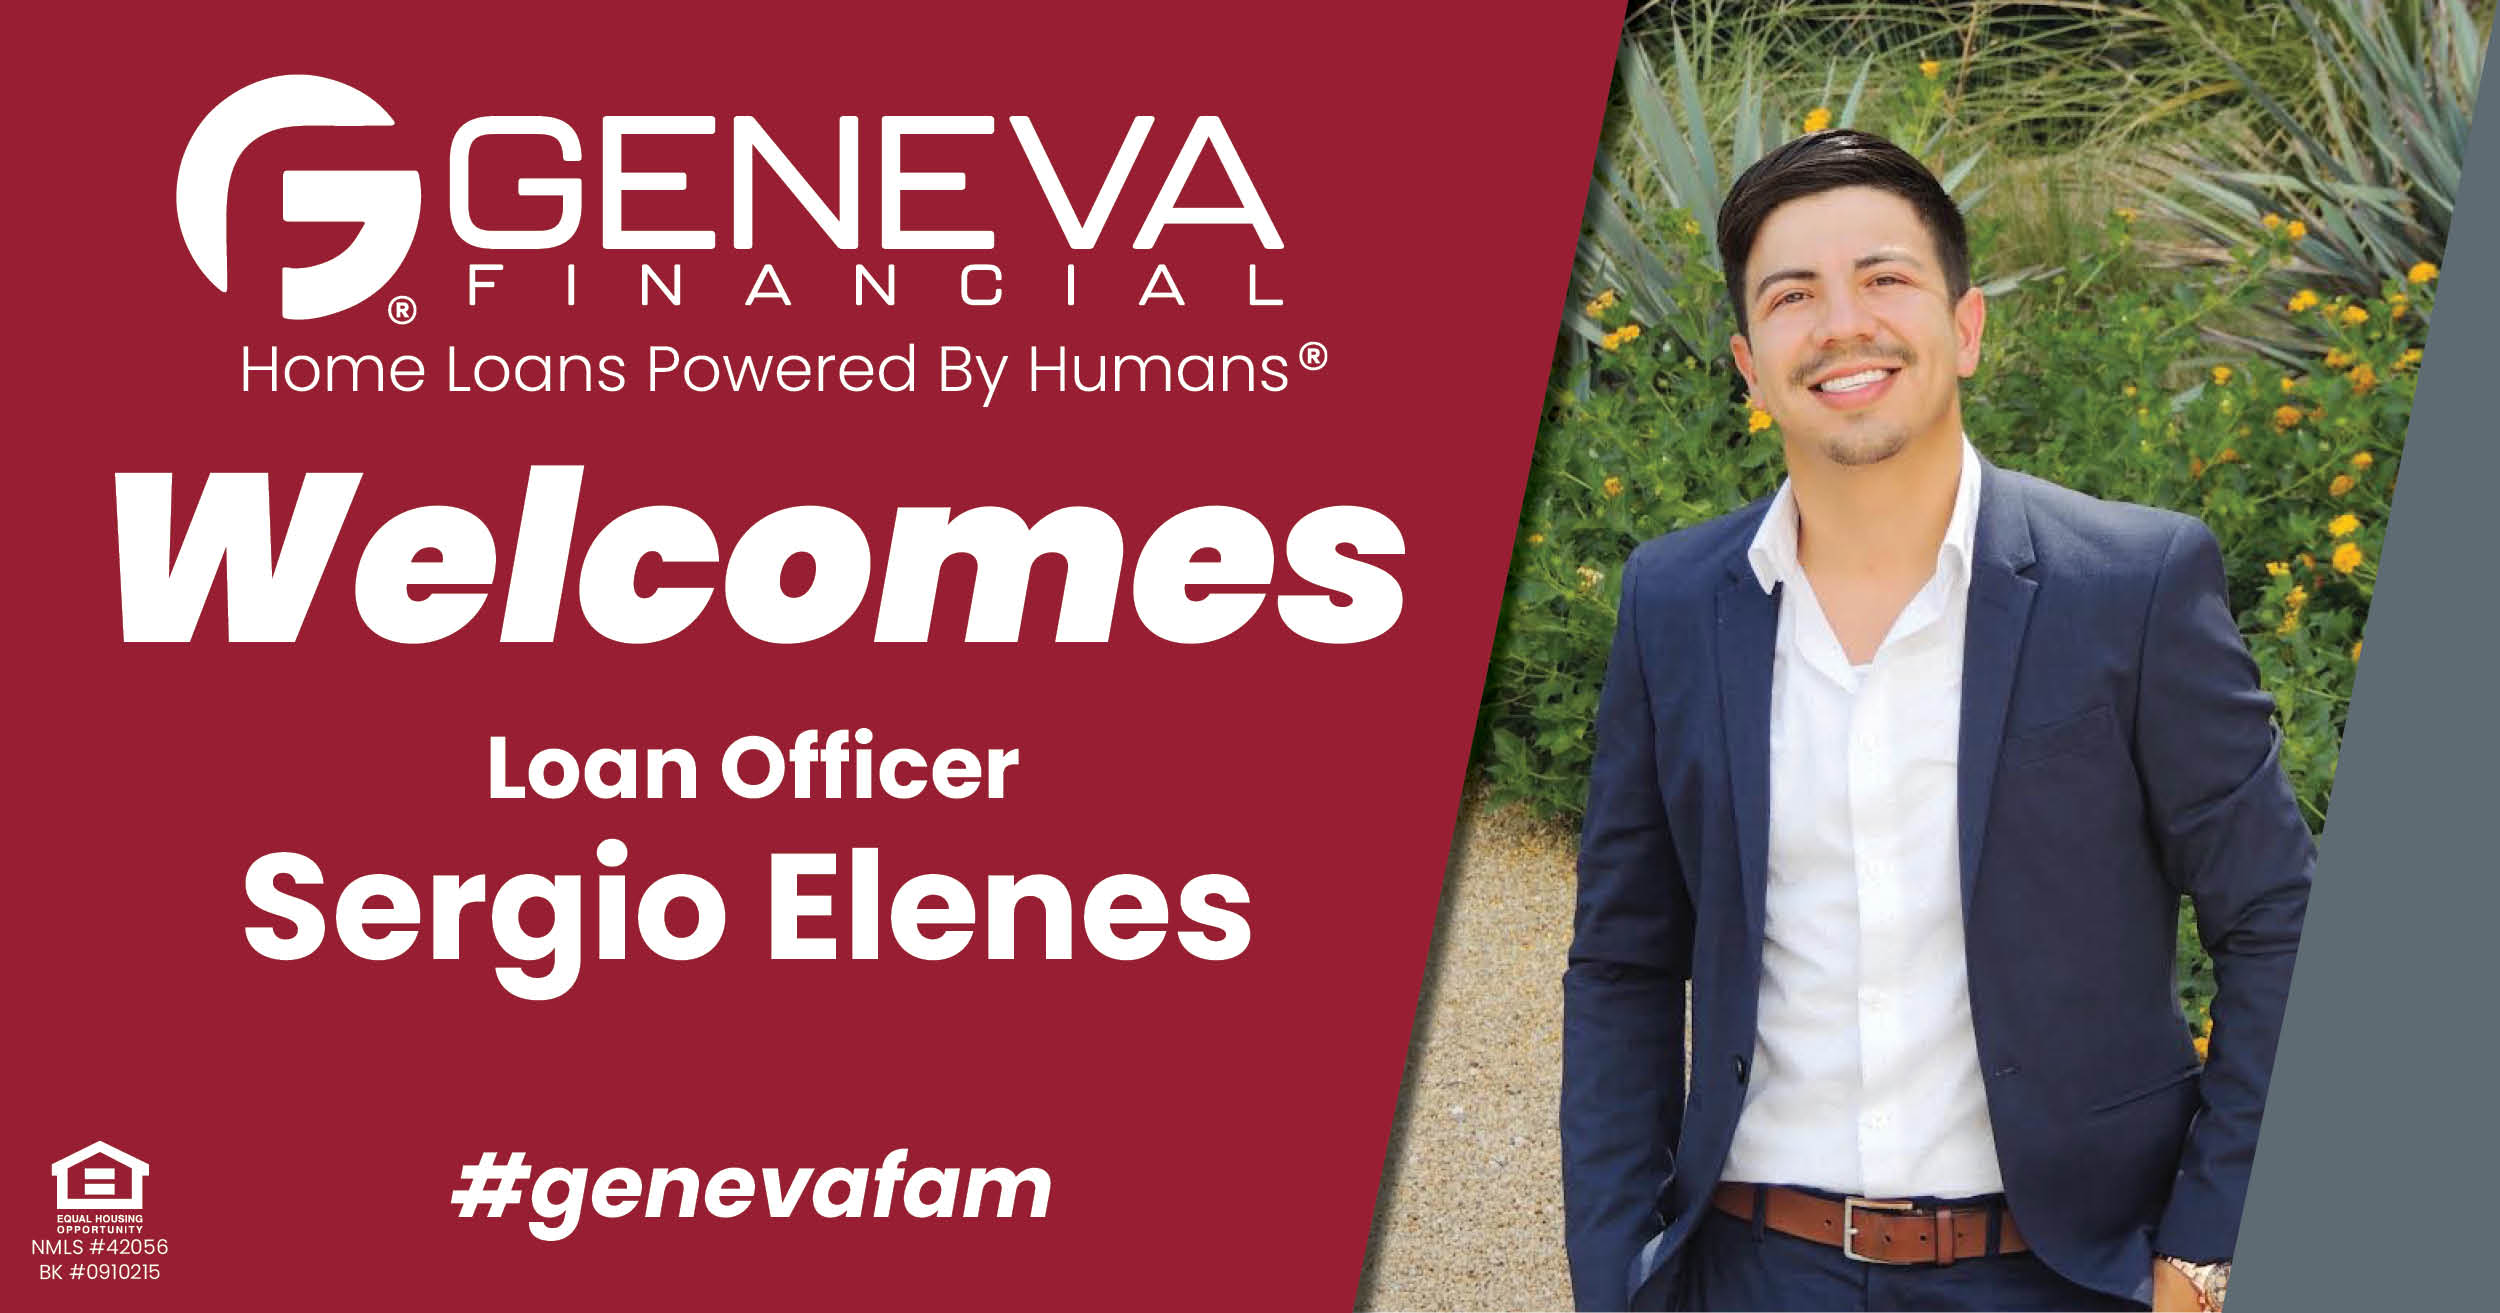 Geneva Financial Welcomes New Loan Officer Sergio Elenes to Phoenix, Arizona– Home Loans Powered by Humans®.